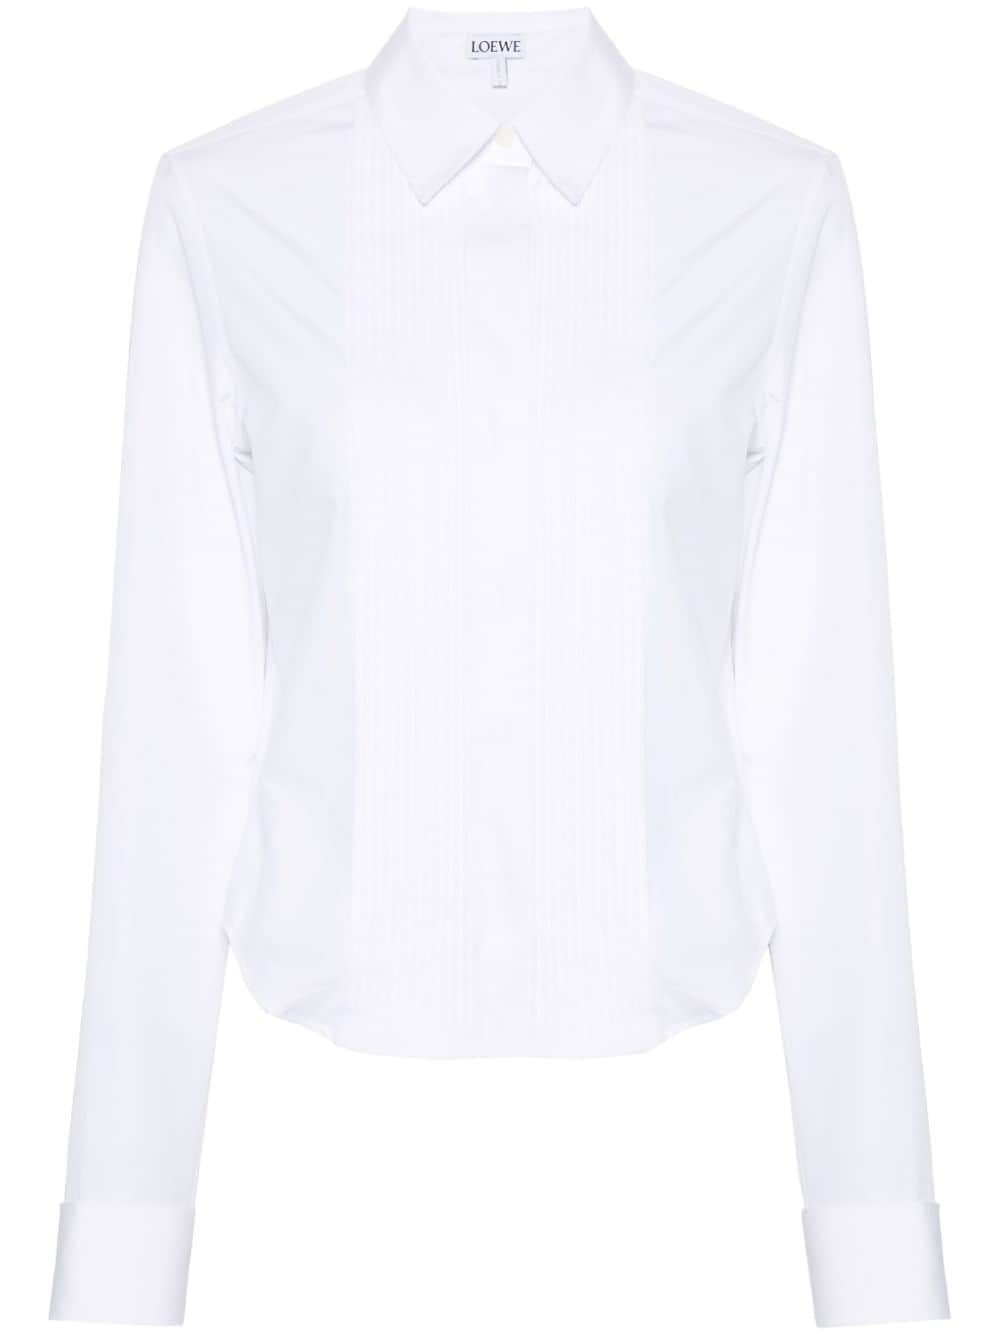 Loewe 压褶府绸衬衫 In White